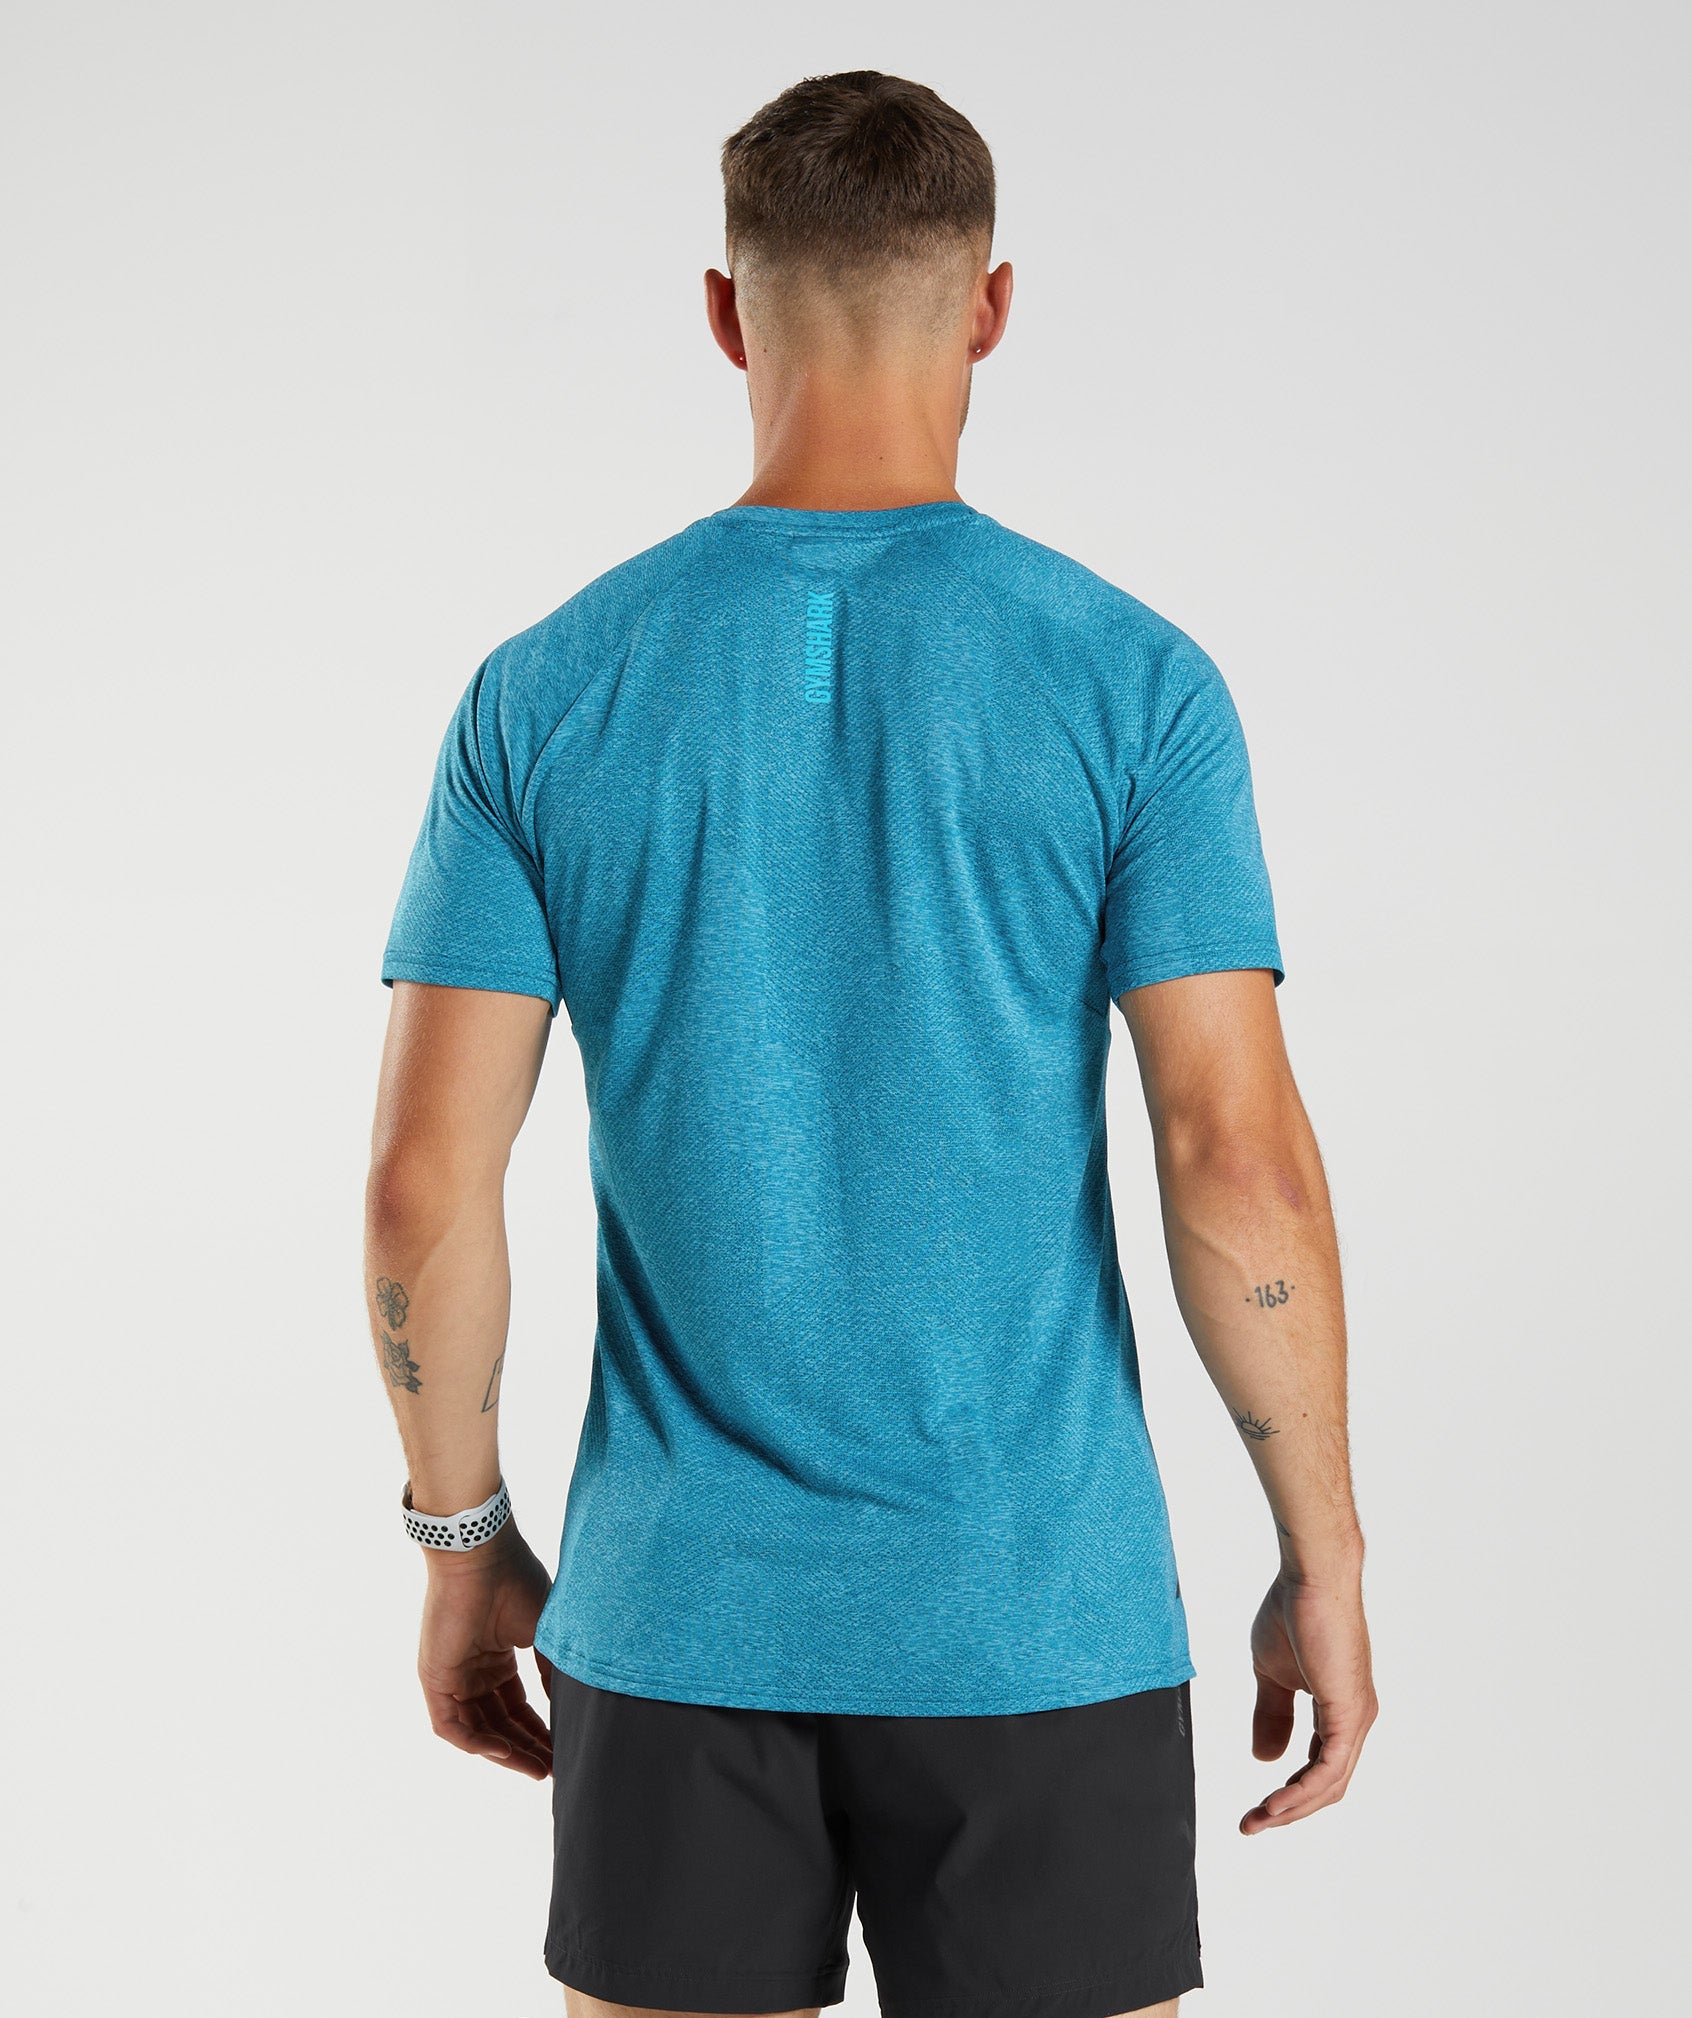 Apex T-Shirt in Atlantic Blue/Shark Blue - view 2